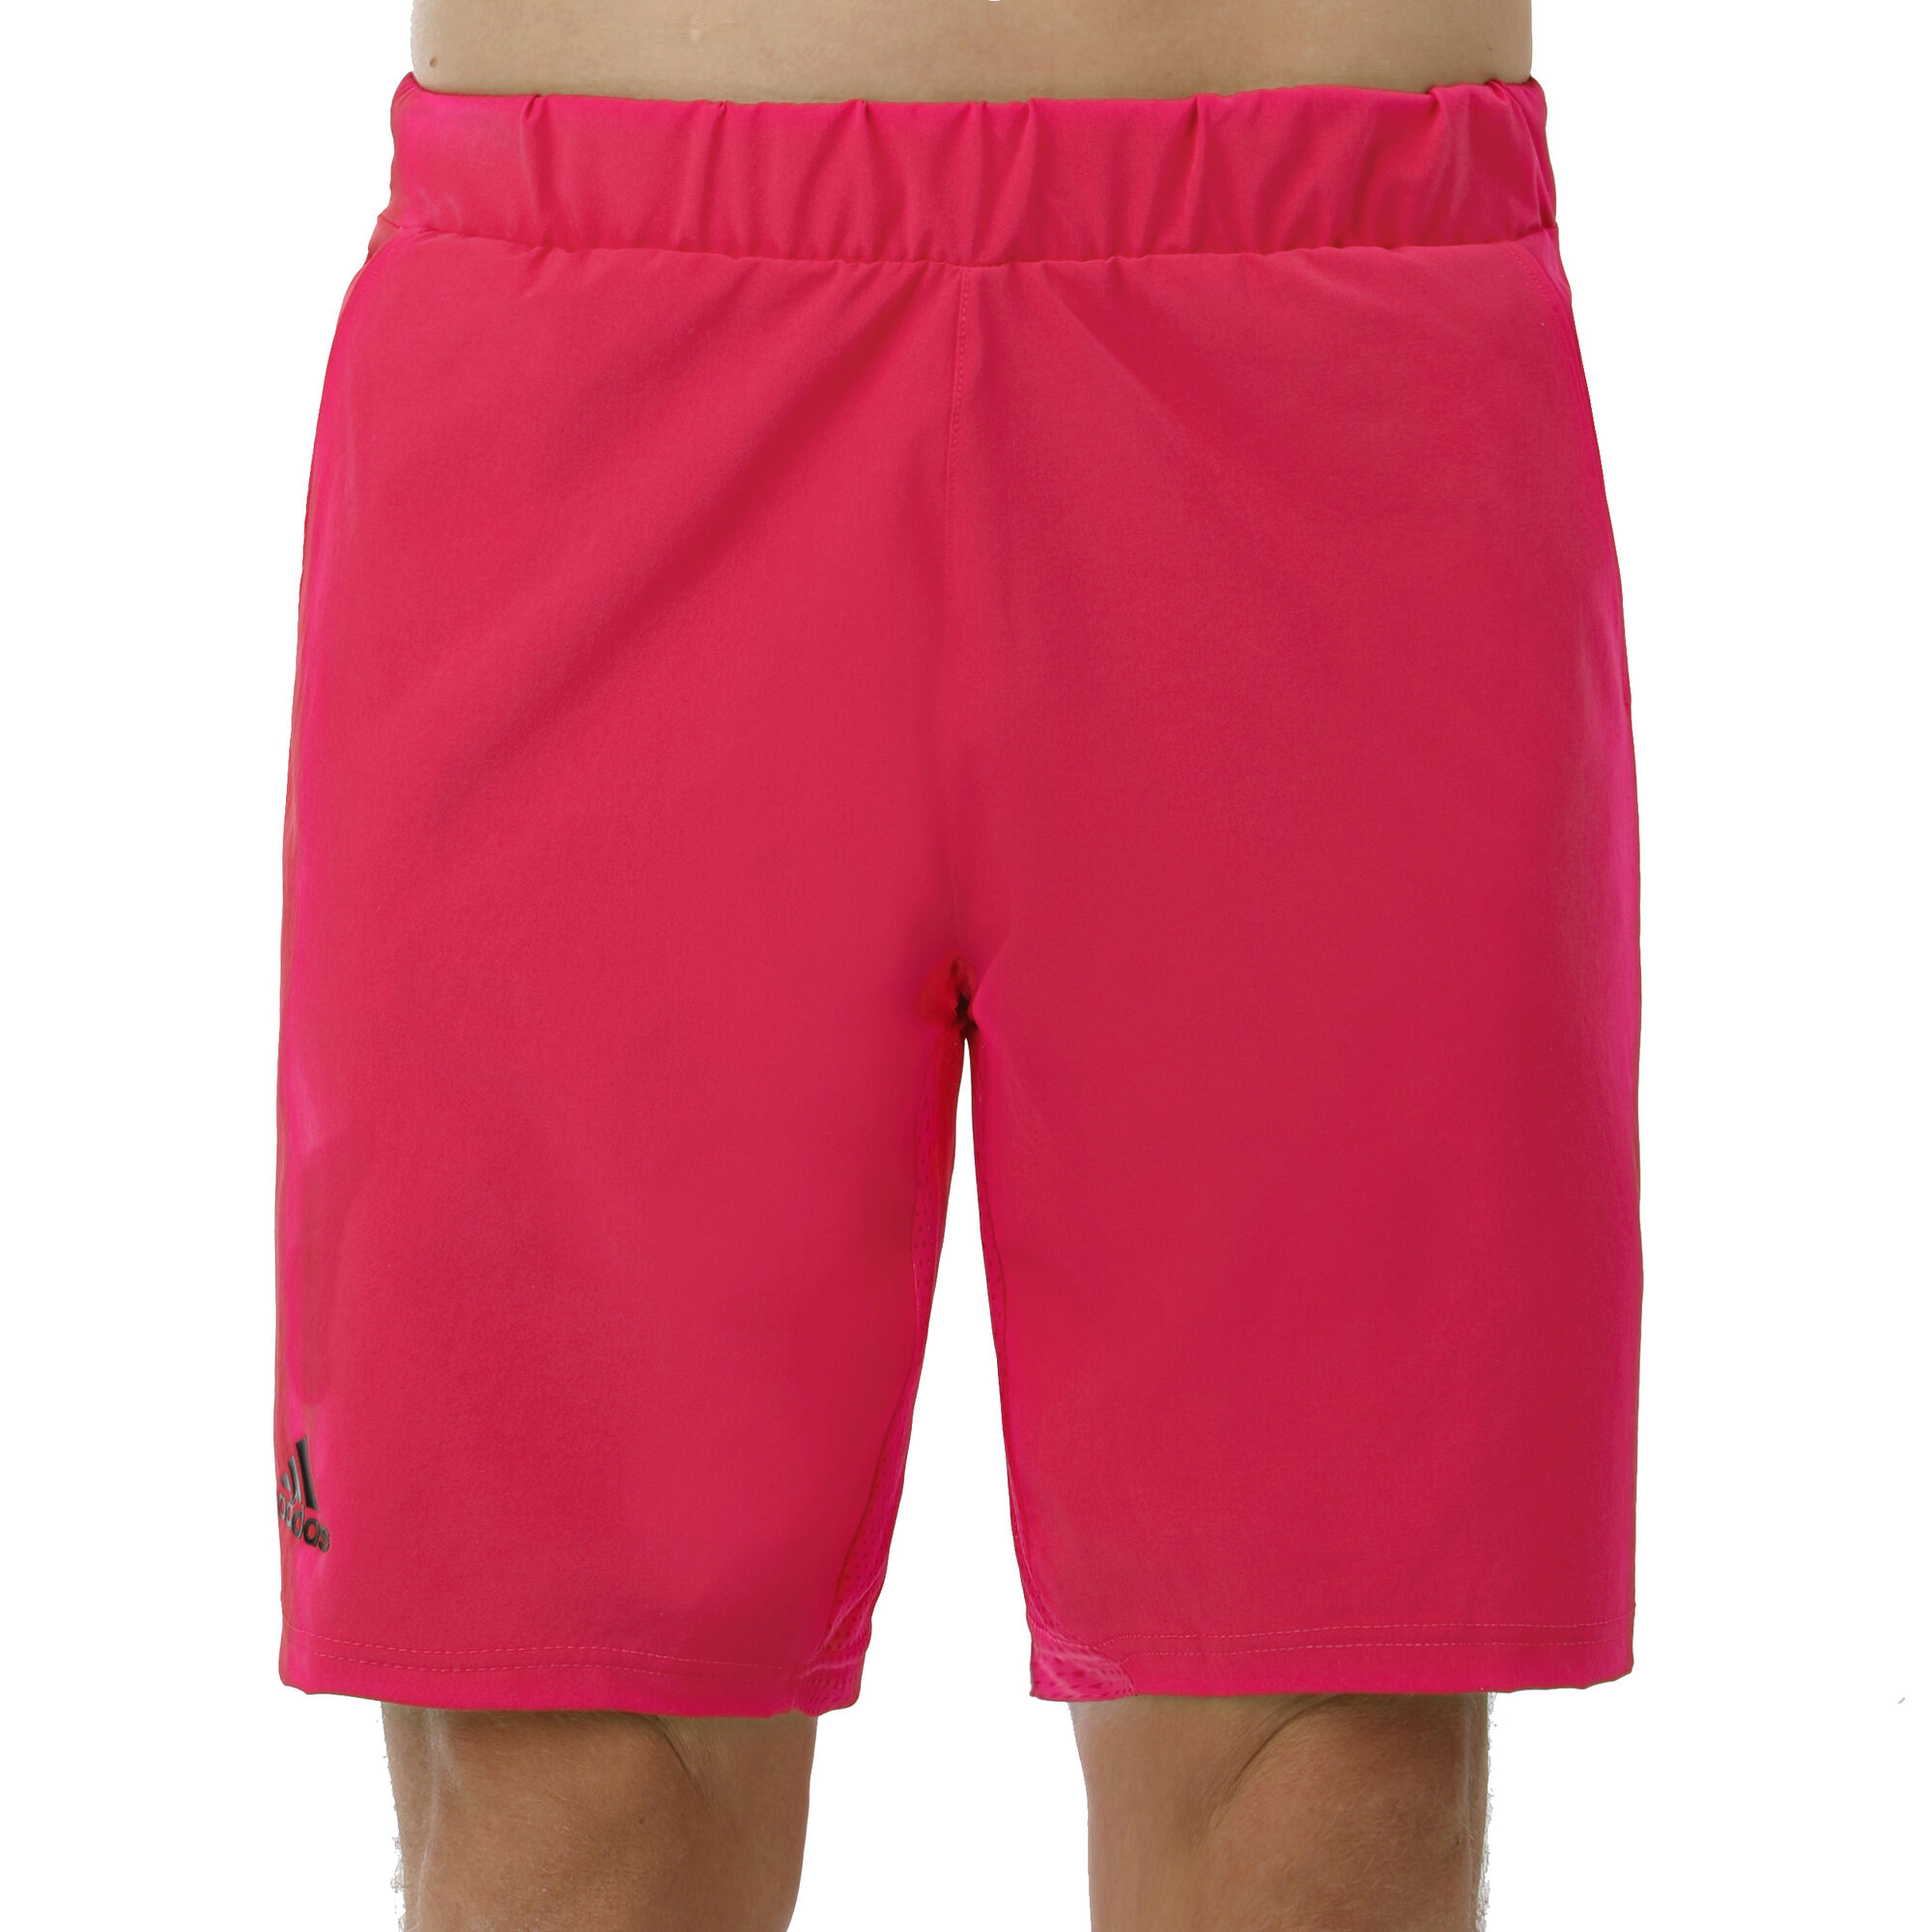 Buy adidas 2in1 Heat Ready online Men Shorts COM Point Pink Tennis 